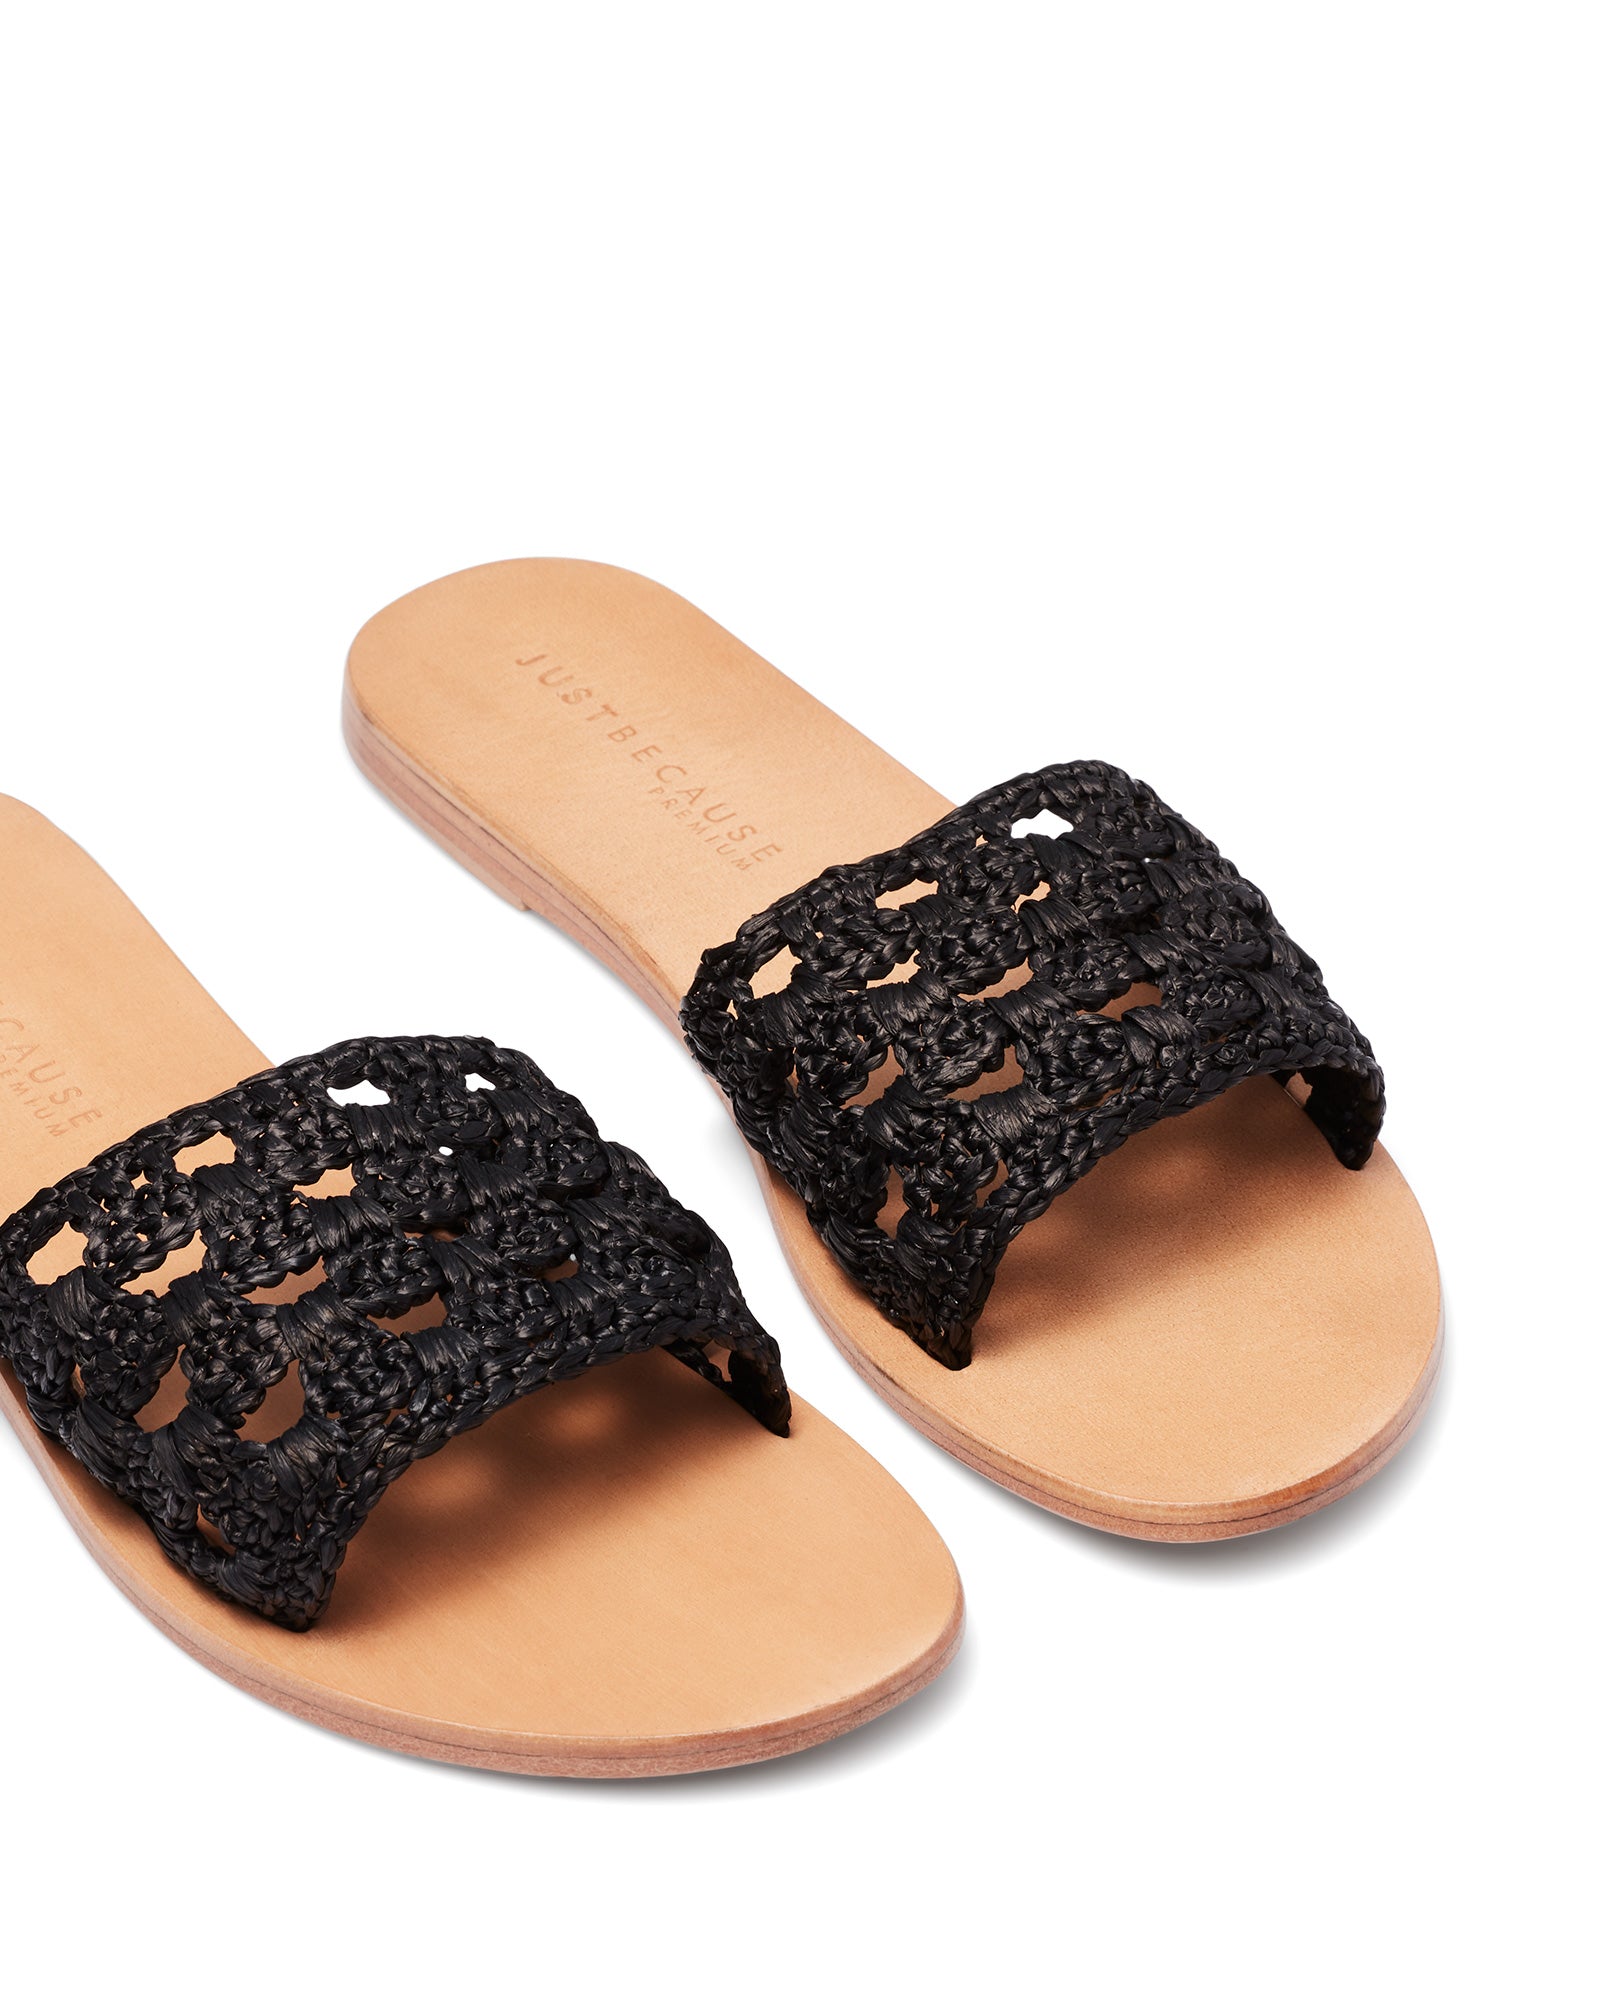 Just Because Shoes Atolls Black | Sandals | Slides | Flats | Raffia